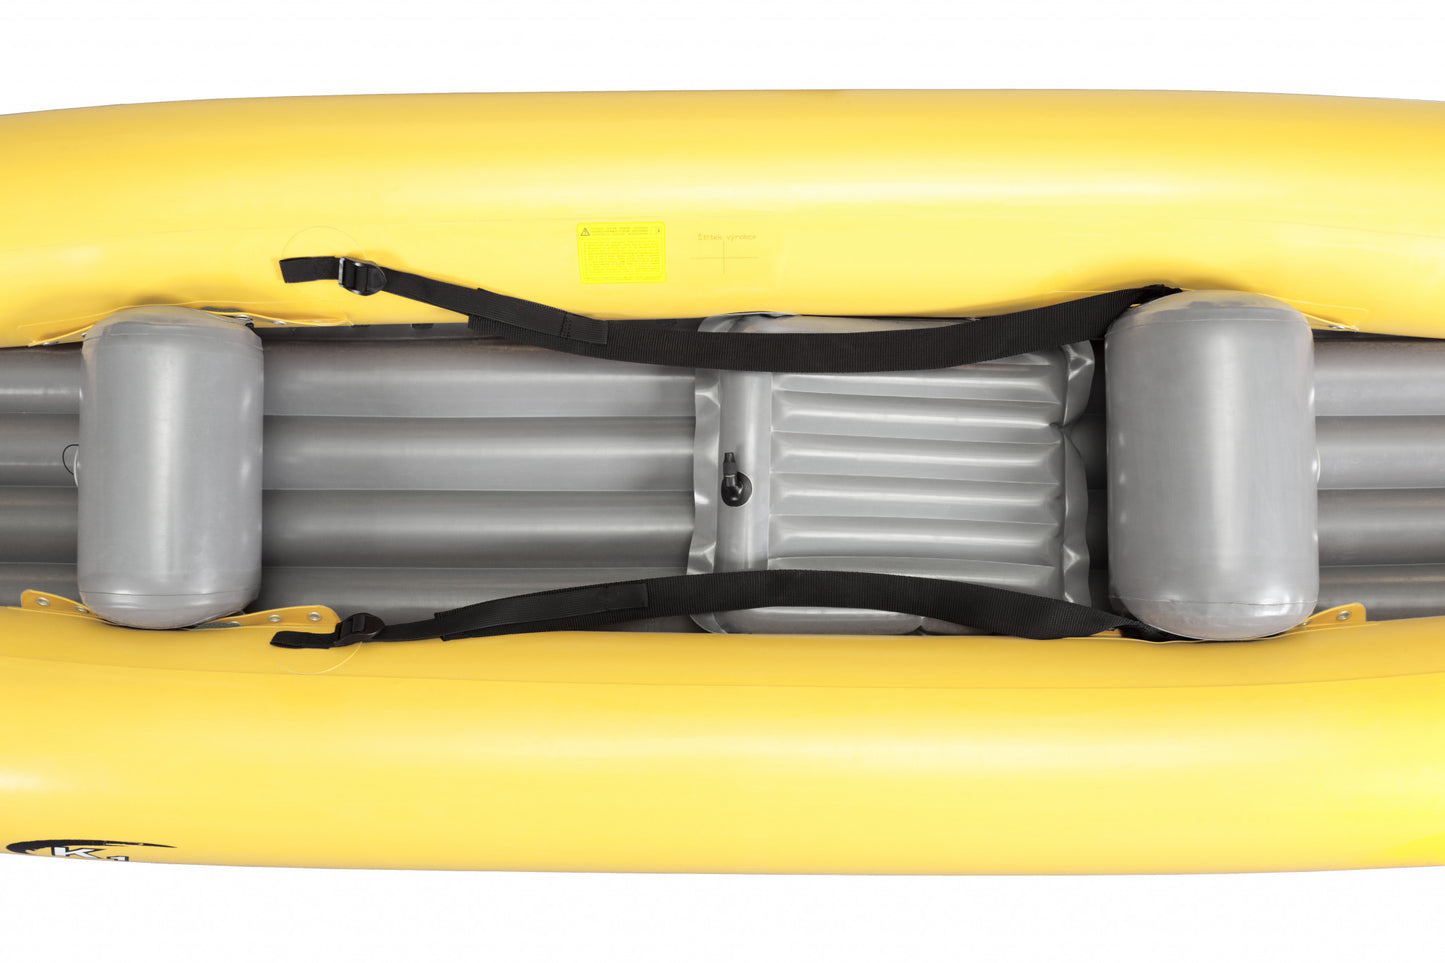 Gumotex K1 Inflatable Kayak